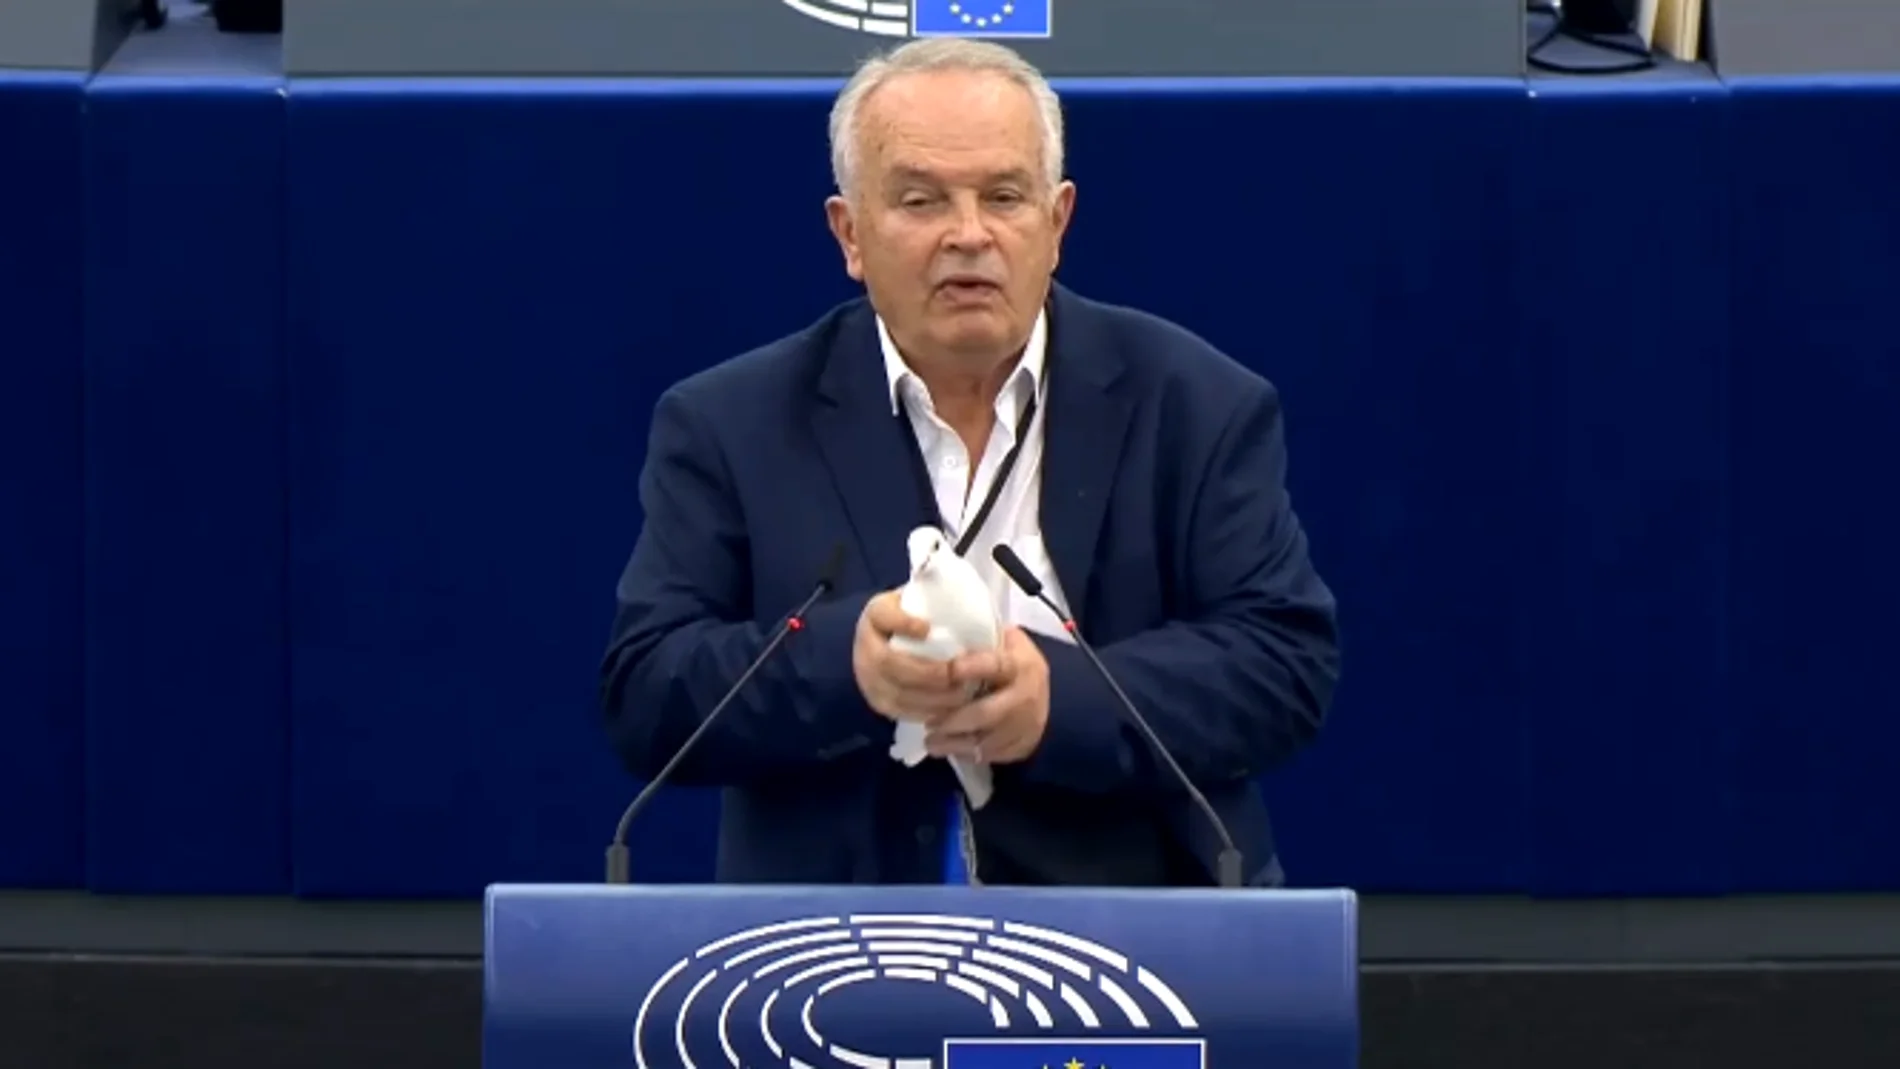 Un eurodiputado de extrema derecha suelta una paloma viva en pleno hemiciclo para pedir la paz en Europa